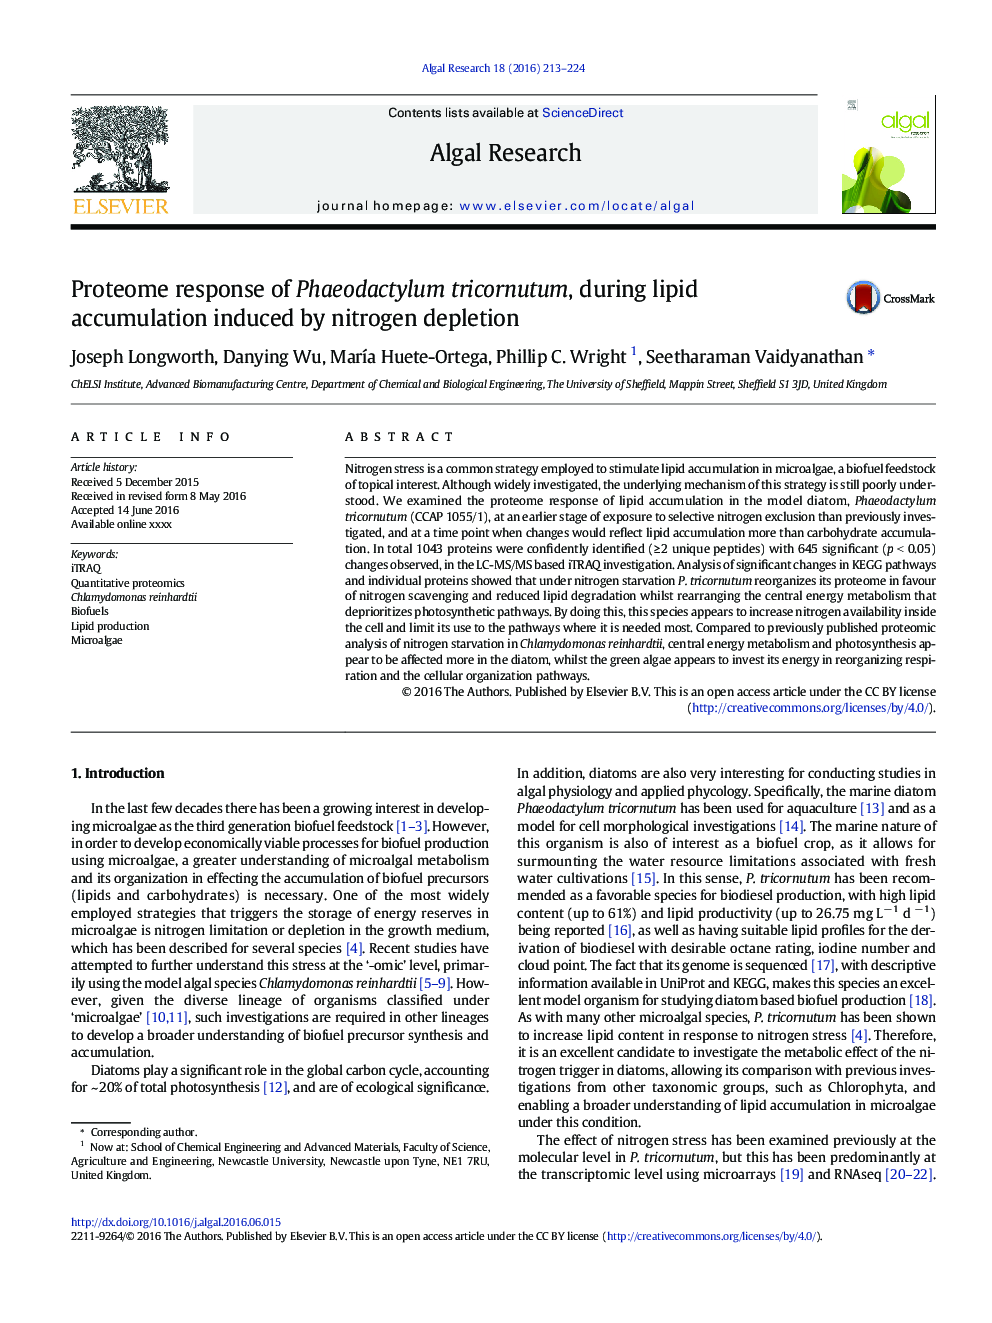 Proteome response of Phaeodactylum tricornutum, during lipid accumulation induced by nitrogen depletion